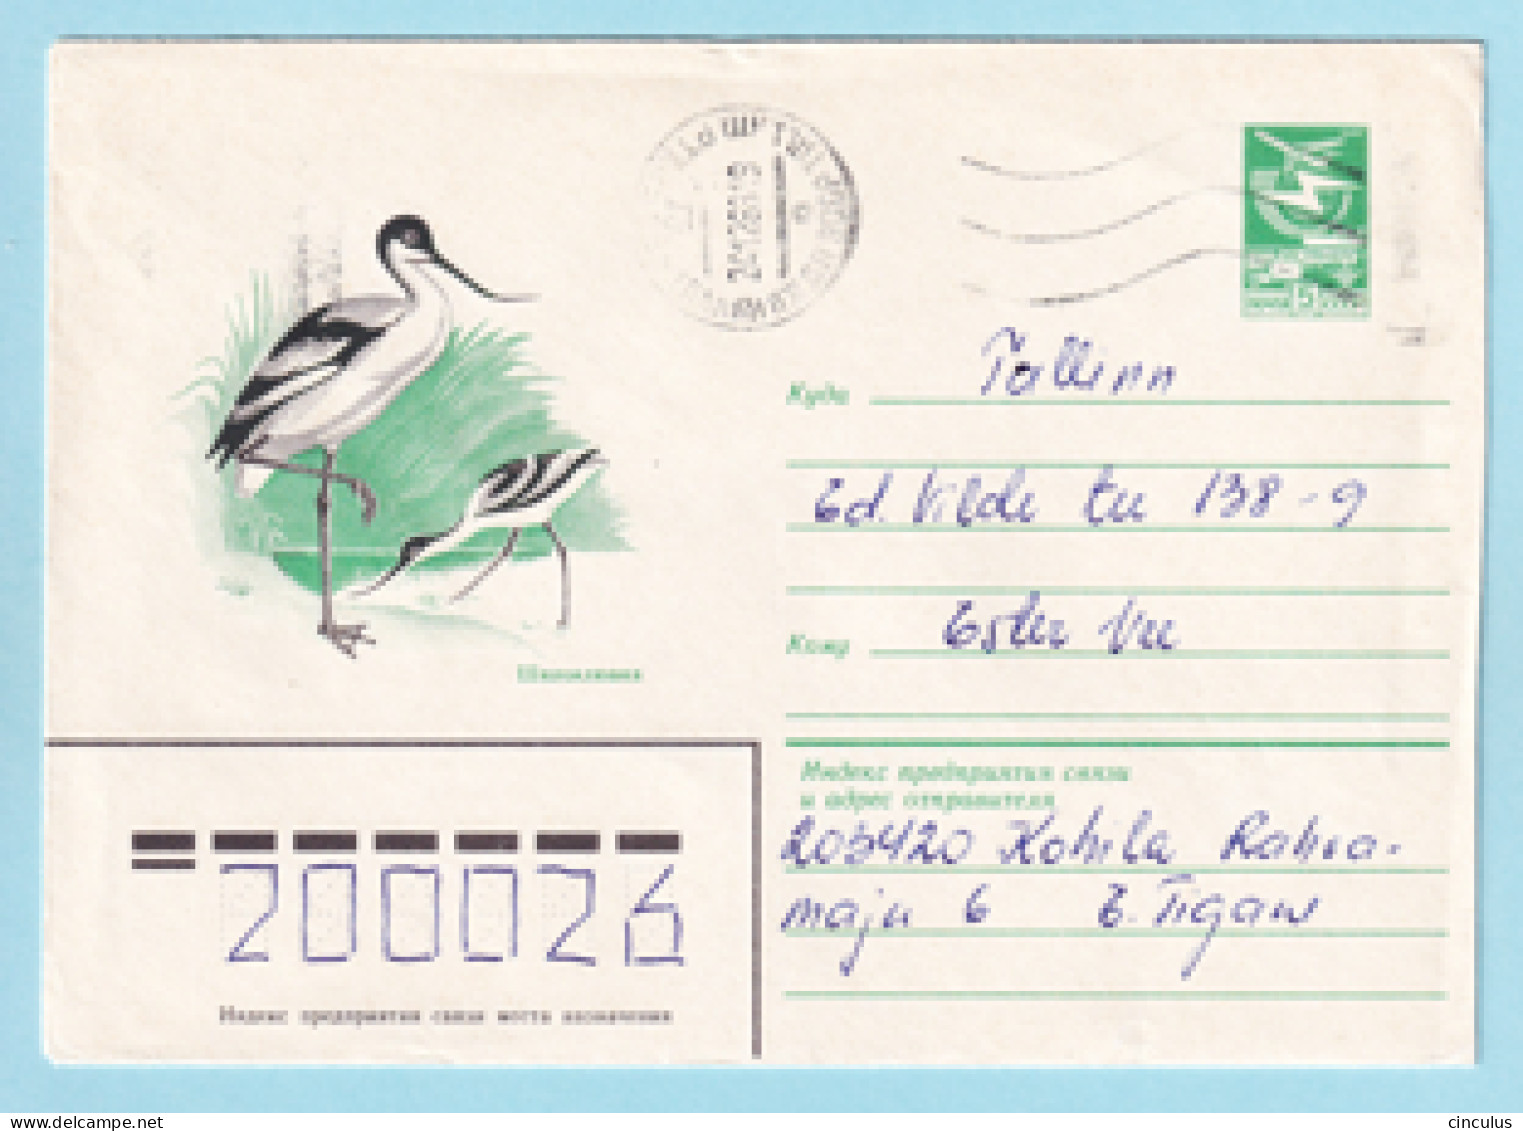 USSR 1983.0414. Pied Avocet (Recurvirostra Avosetta). Prestamped Cover, Used - 1980-91